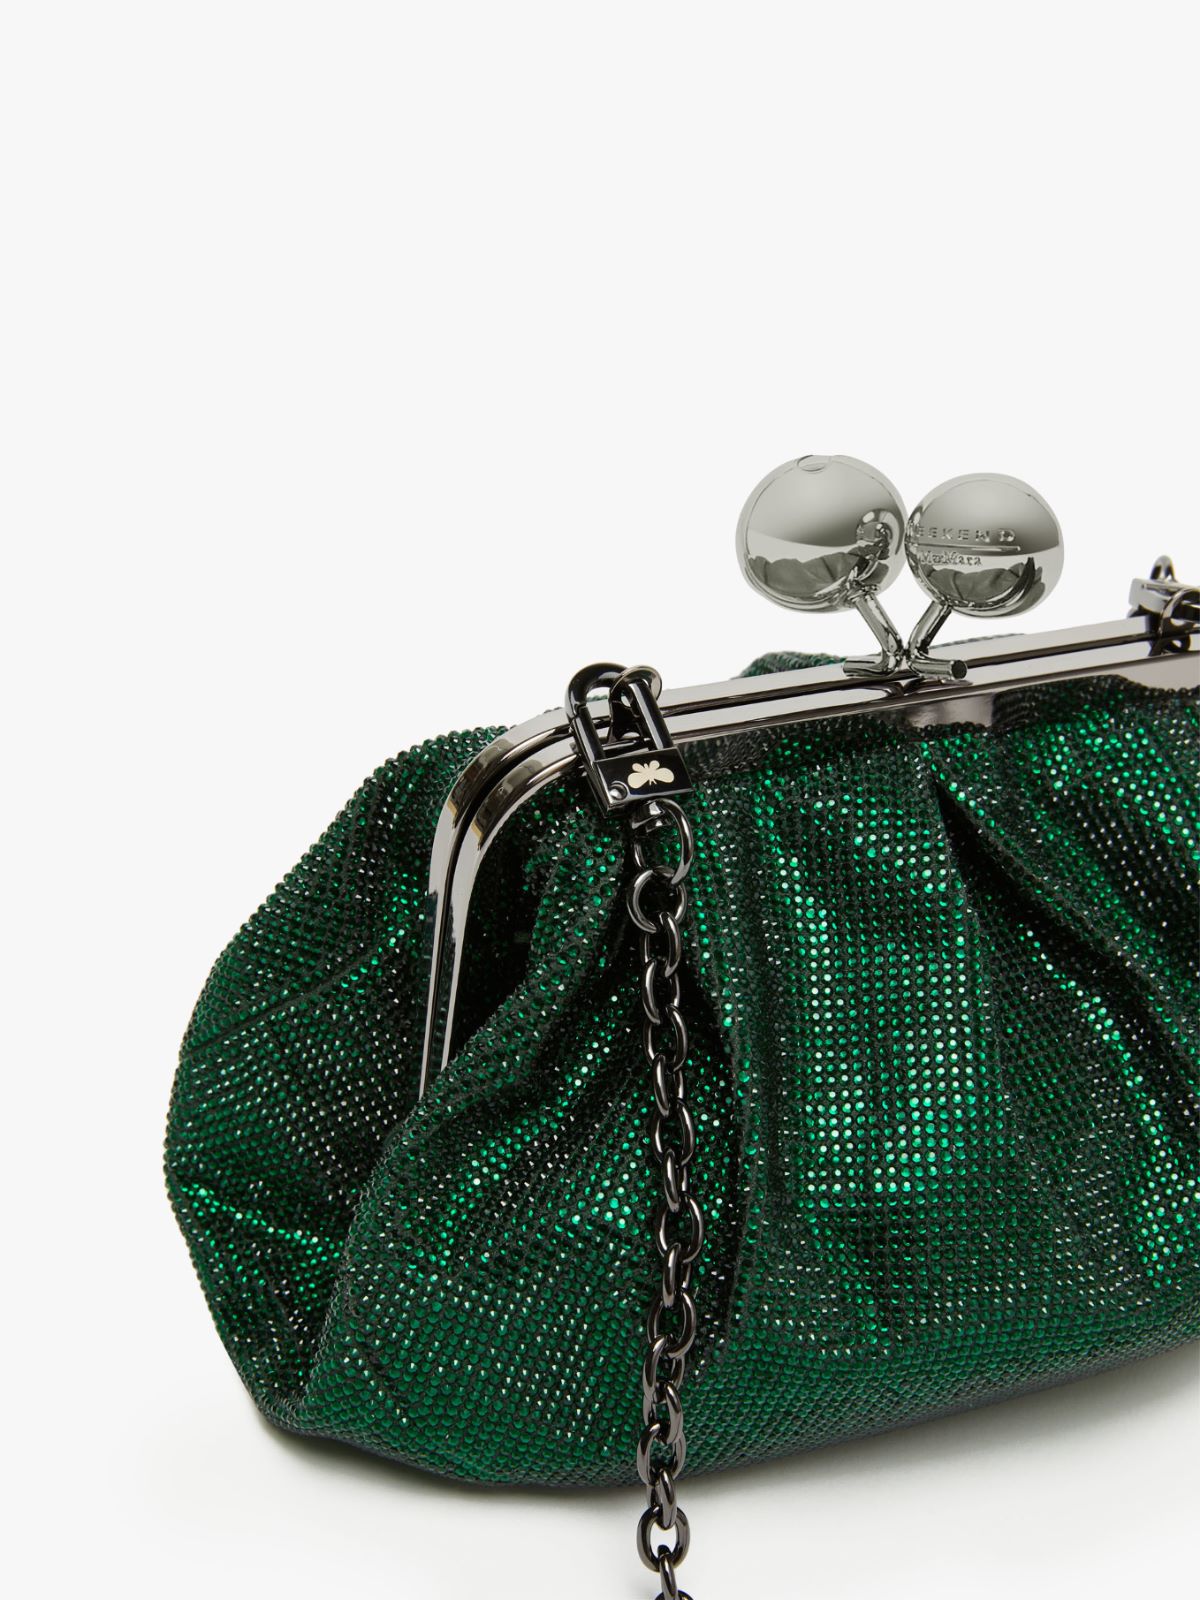 Small Pasticcino Bag in rhinestones - EMERALD - Weekend Max Mara - 5